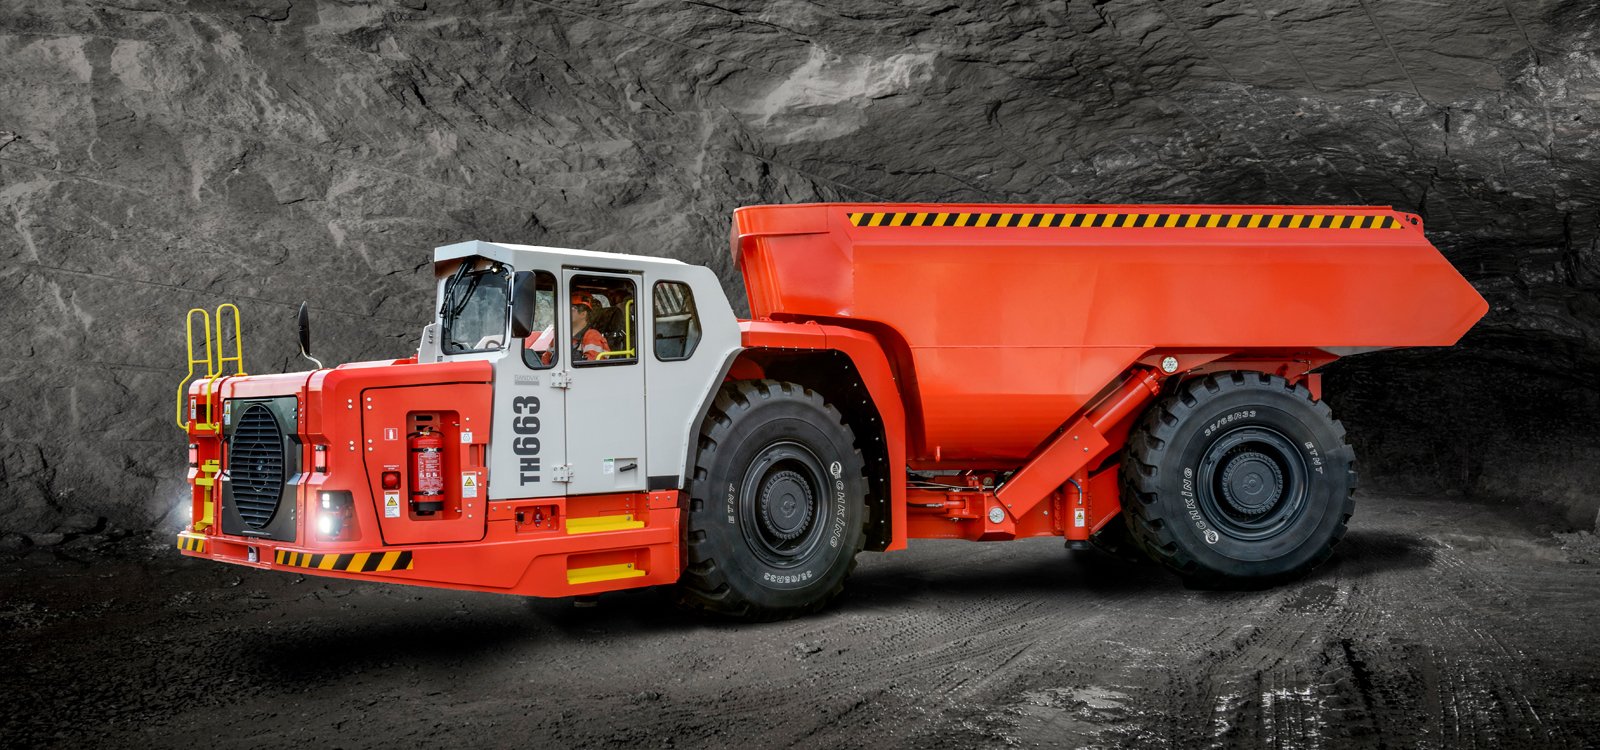 <p>澳大利亚FMR Investments在为其Eloise矿山购置一批全新卡车时，选择了山特维克的融资方案。</p>
